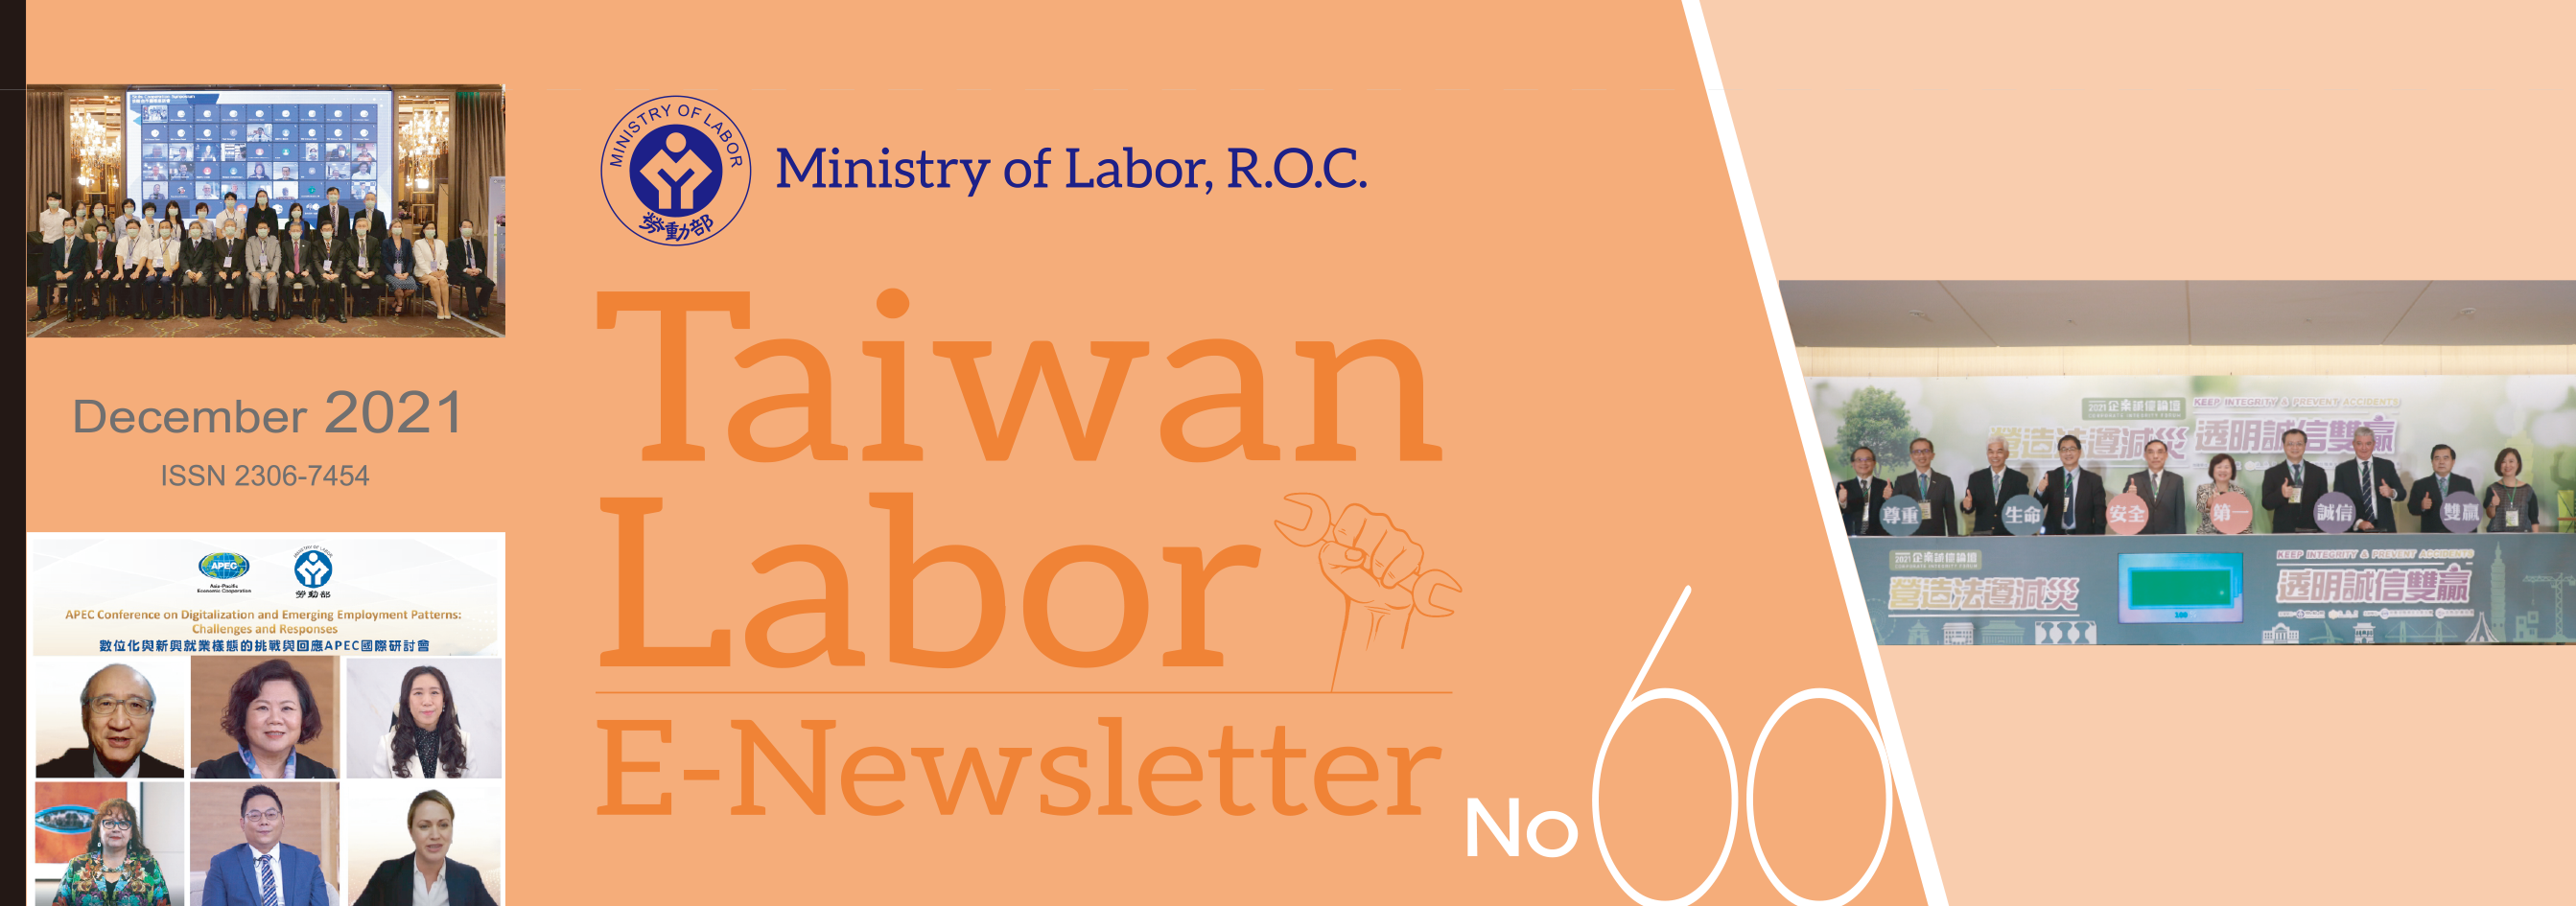 Taiwan Labor E-Newsletter No.60 Banner